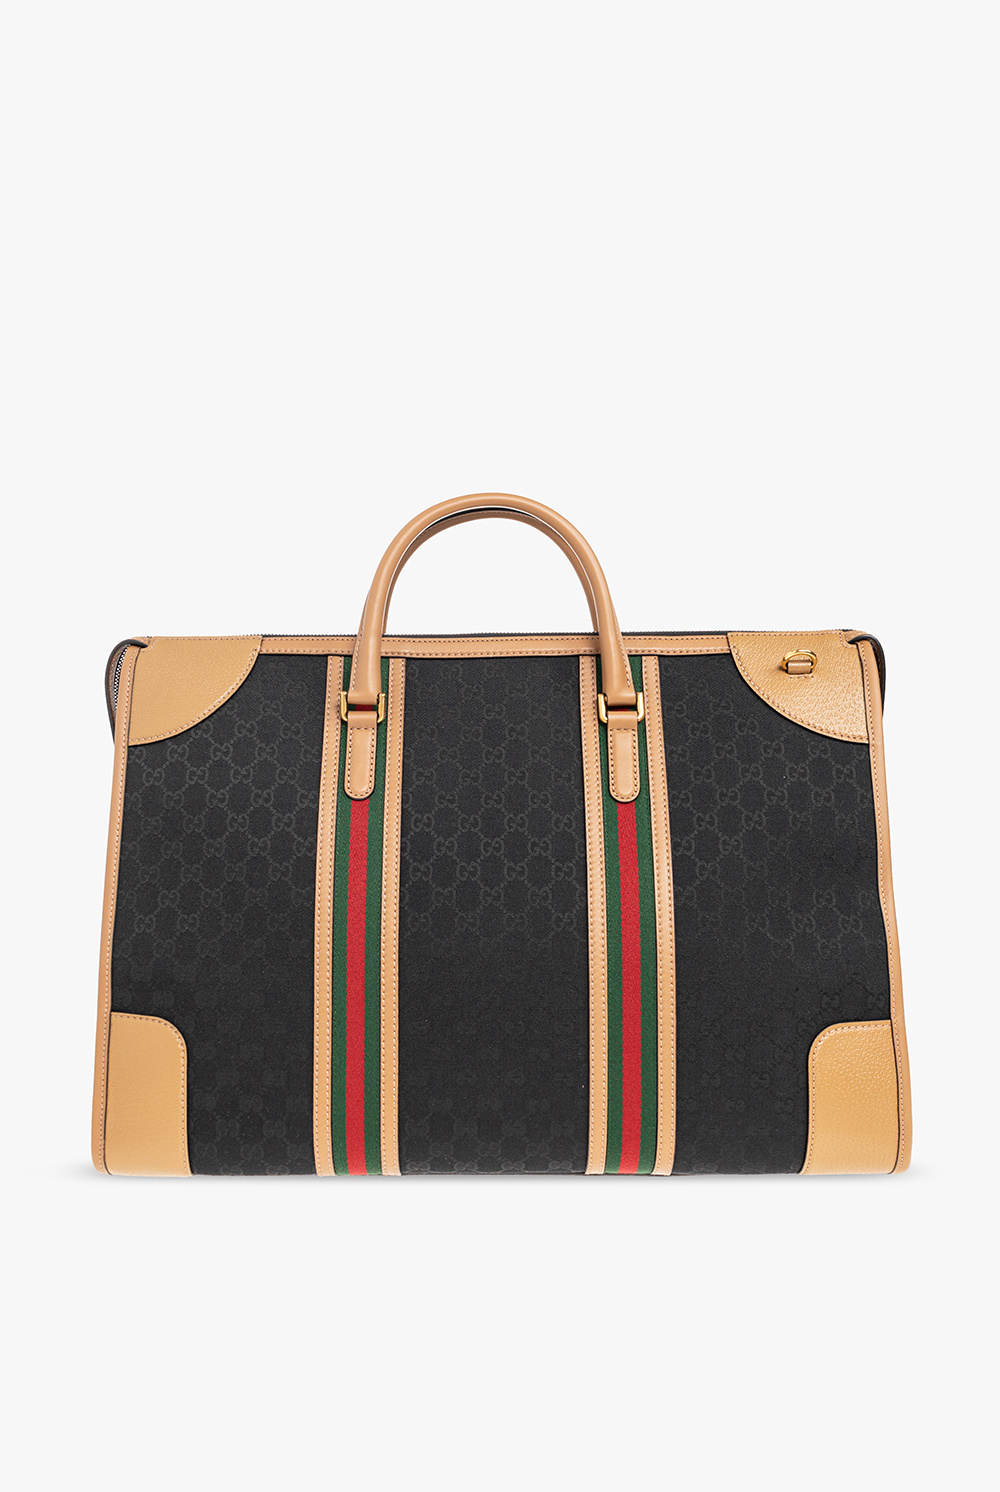 Gucci, Bags, Vintage Gucci Tennis Bag 7s